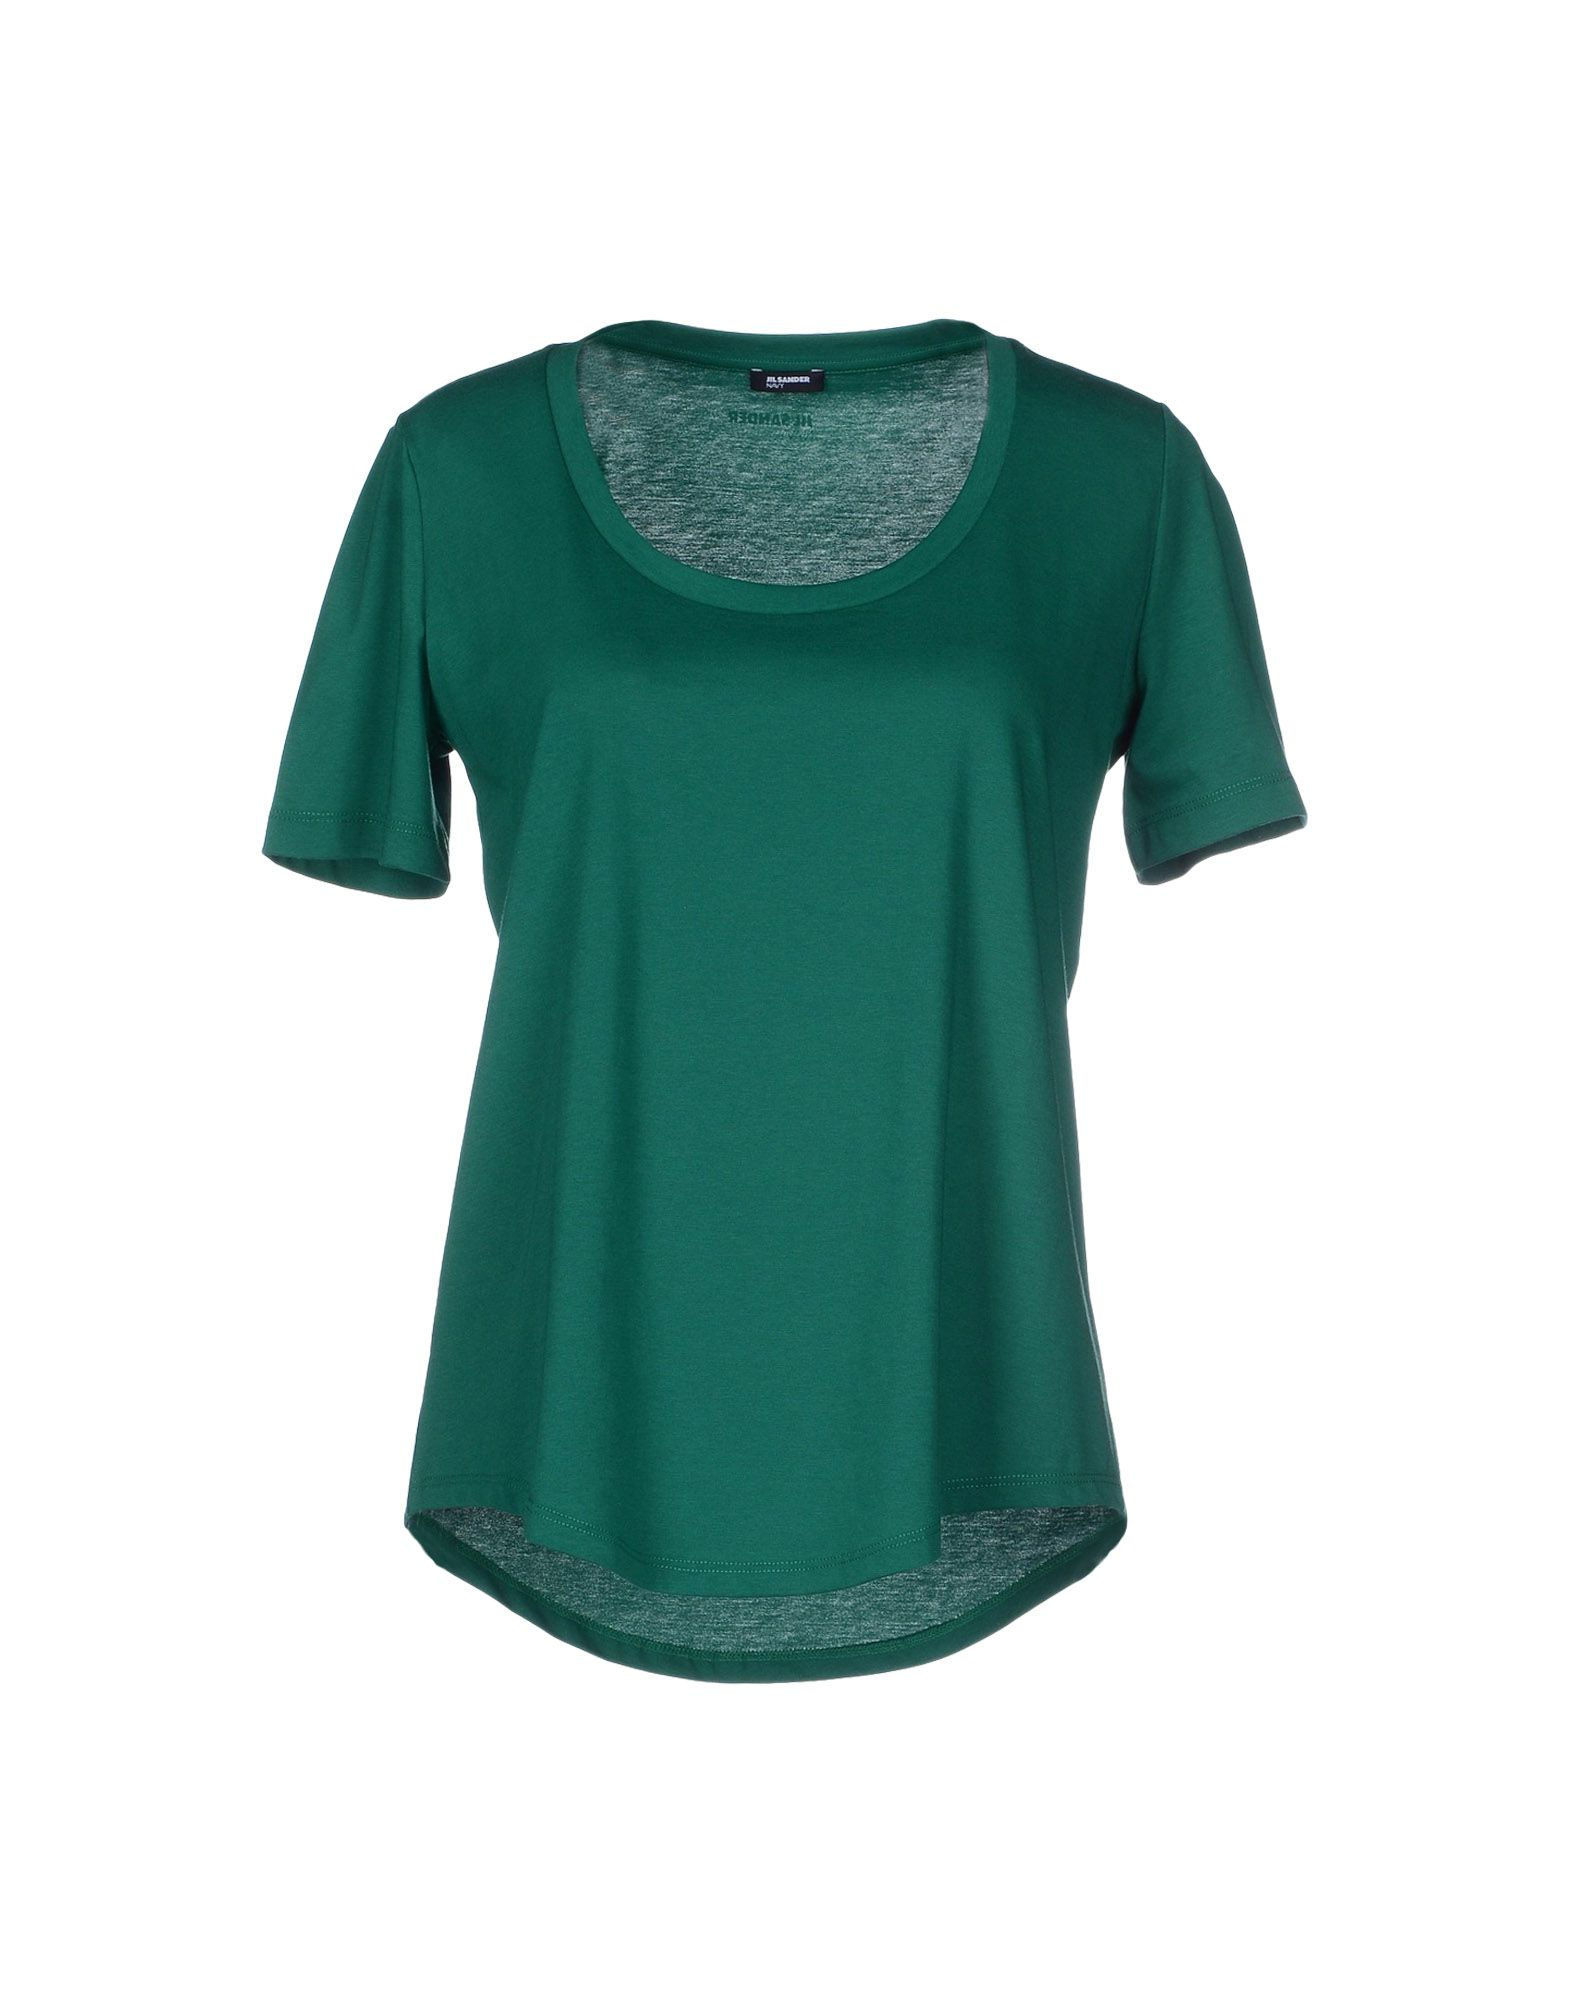 Jil Sander Navy T-shirt in Green | Lyst